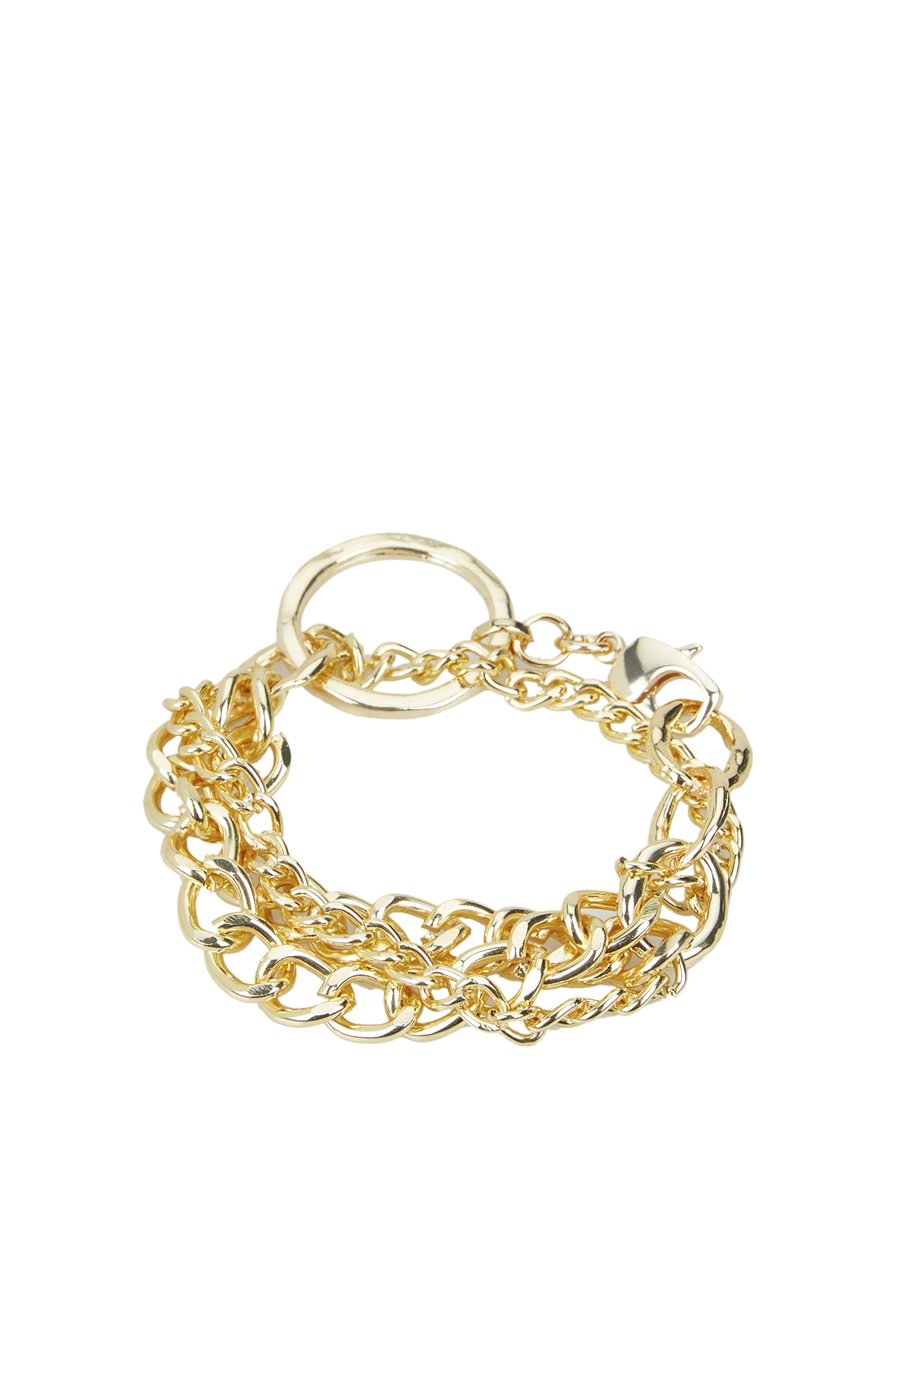 Details about   0.70 Ct Round Sim Diamond Ledies Delicate Star Chain Bracelet 14K Yellow Gold FN